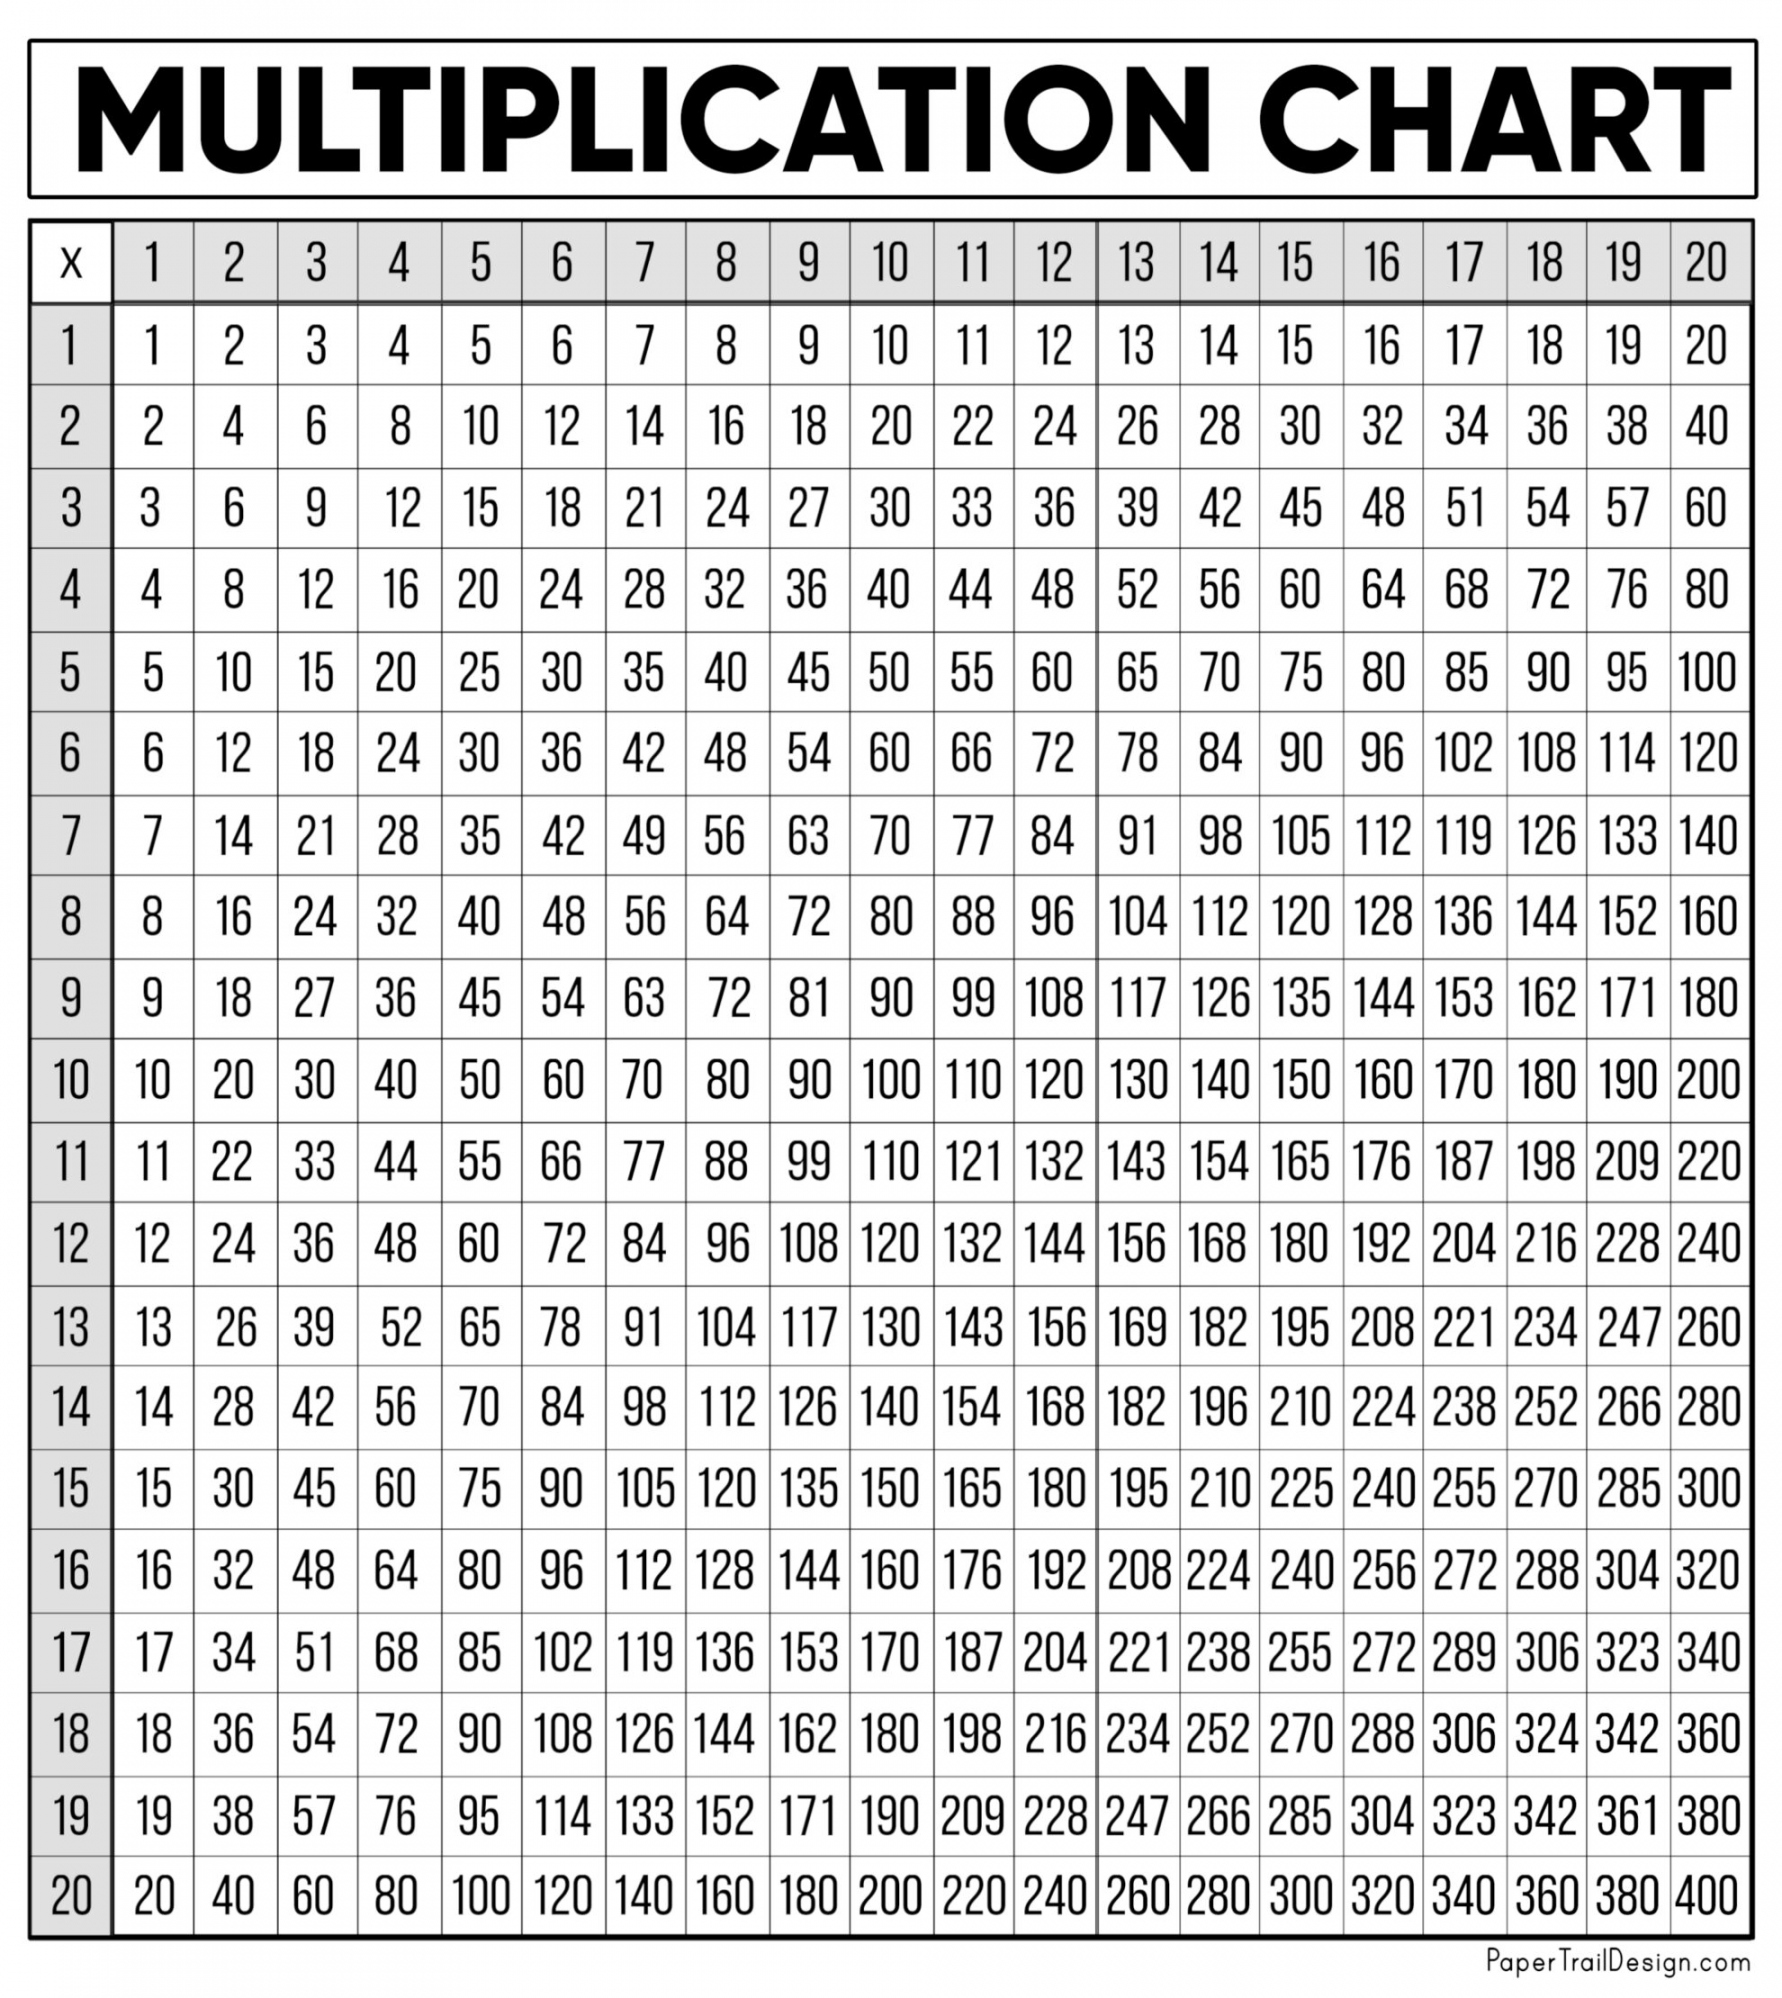 Free Multiplication Chart Printable - Paper Trail Design - FREE Printables - Multiplication Charts Free Printable